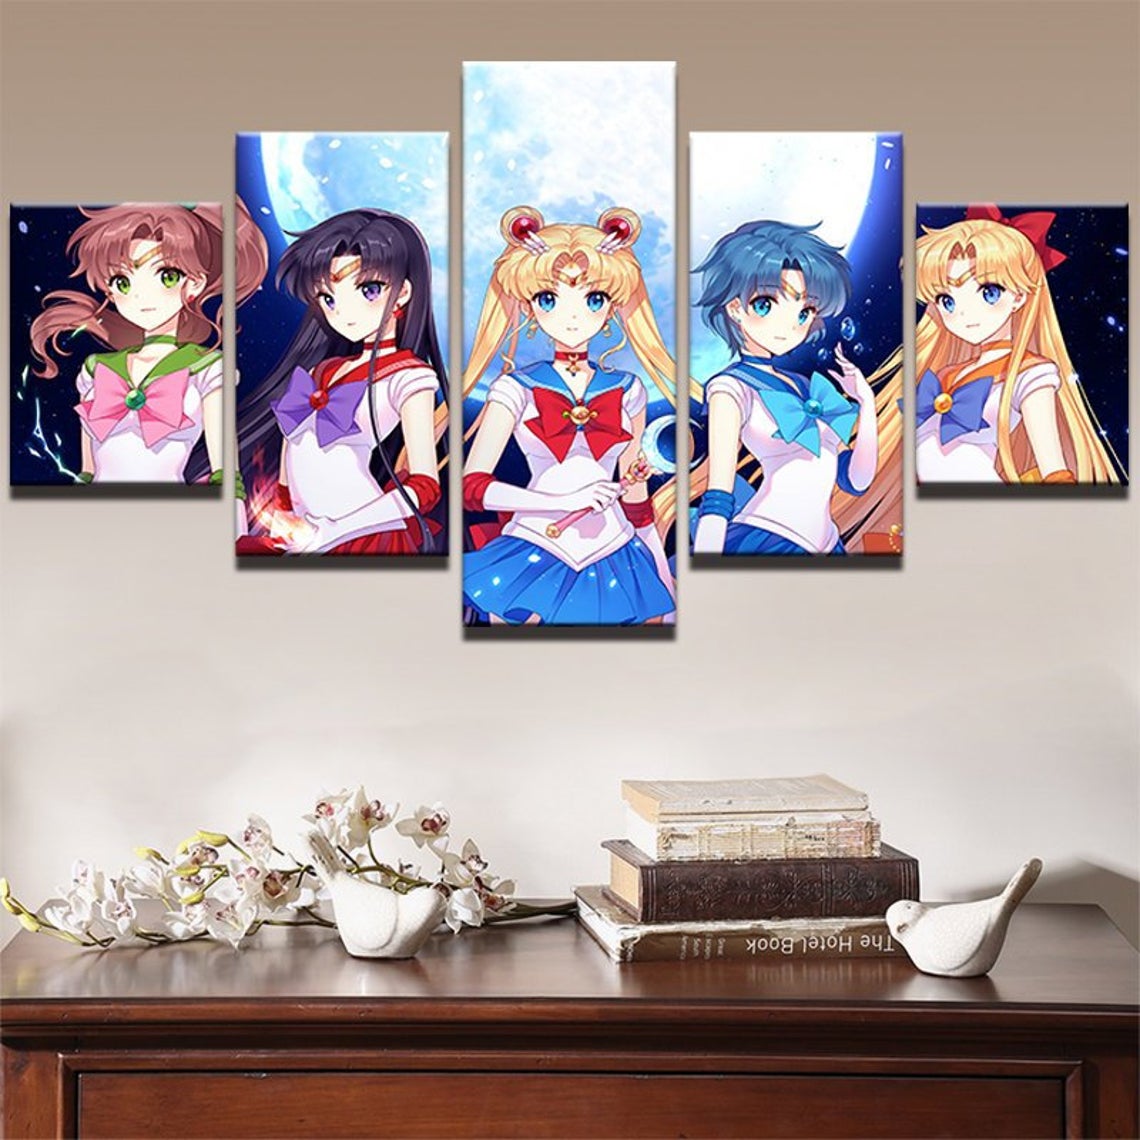 Order Haikyuu – Anime Canvas Art Wall Decor from Brightroomy now!